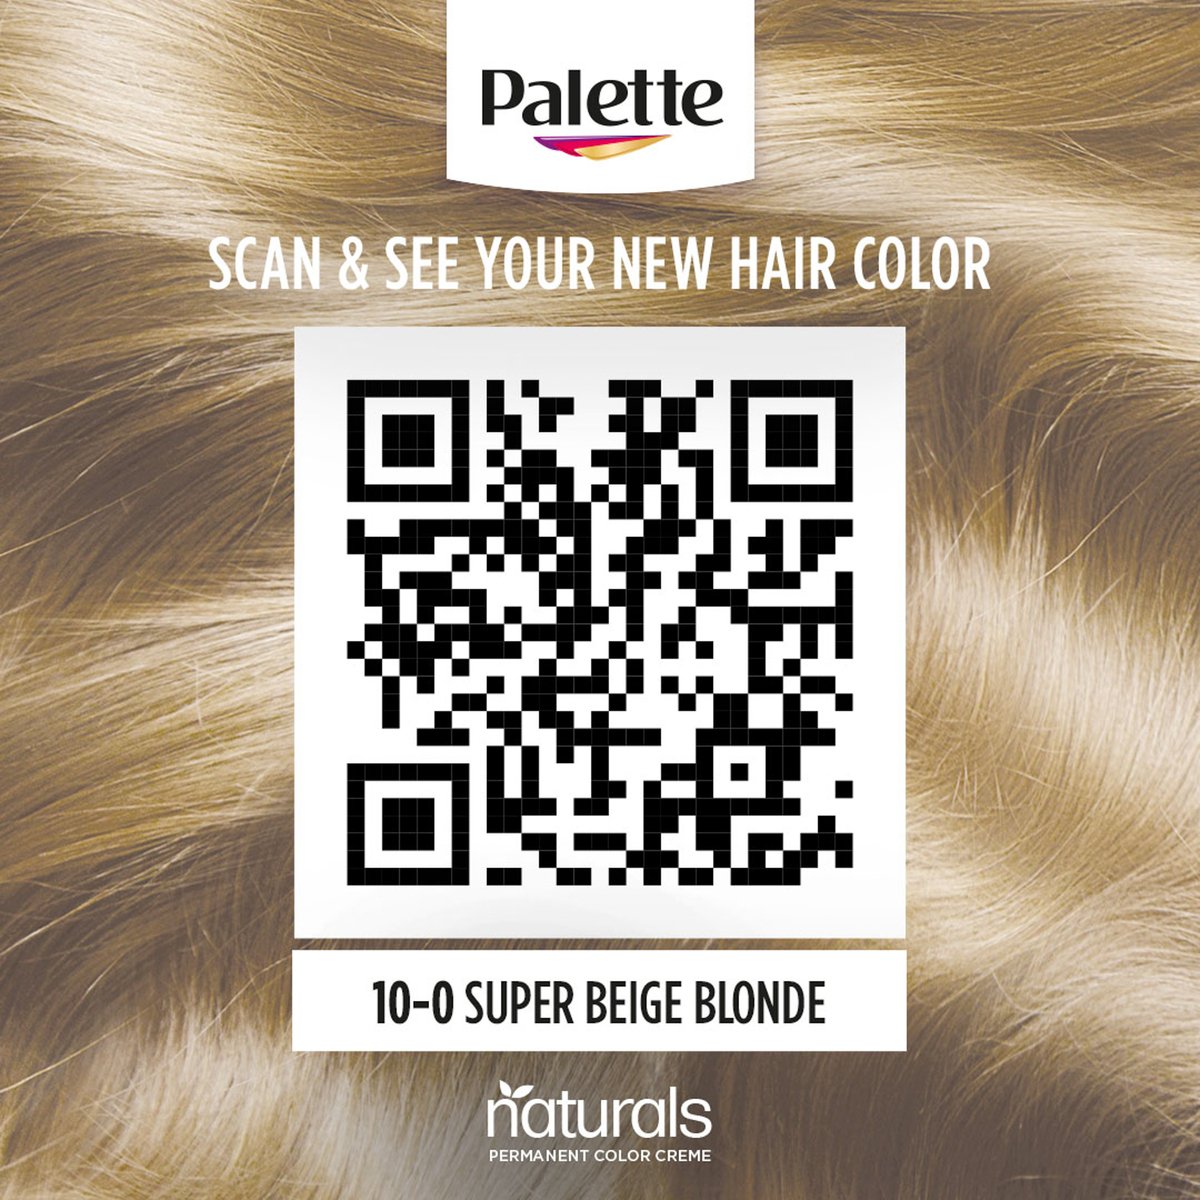 Palette Permanent Naturals Color Creme 10-4 Super Beige Blonde 1 pkt